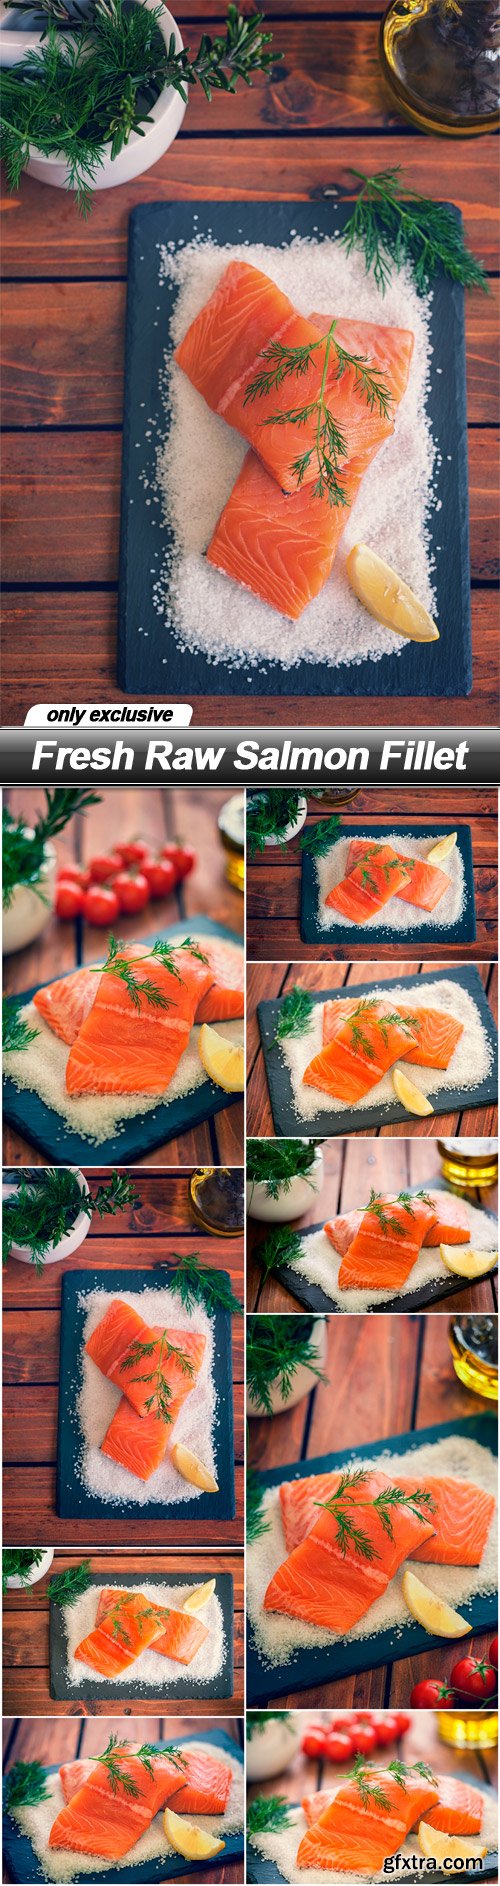 Fresh Raw Salmon Fillet - 9 UHQ JPEG